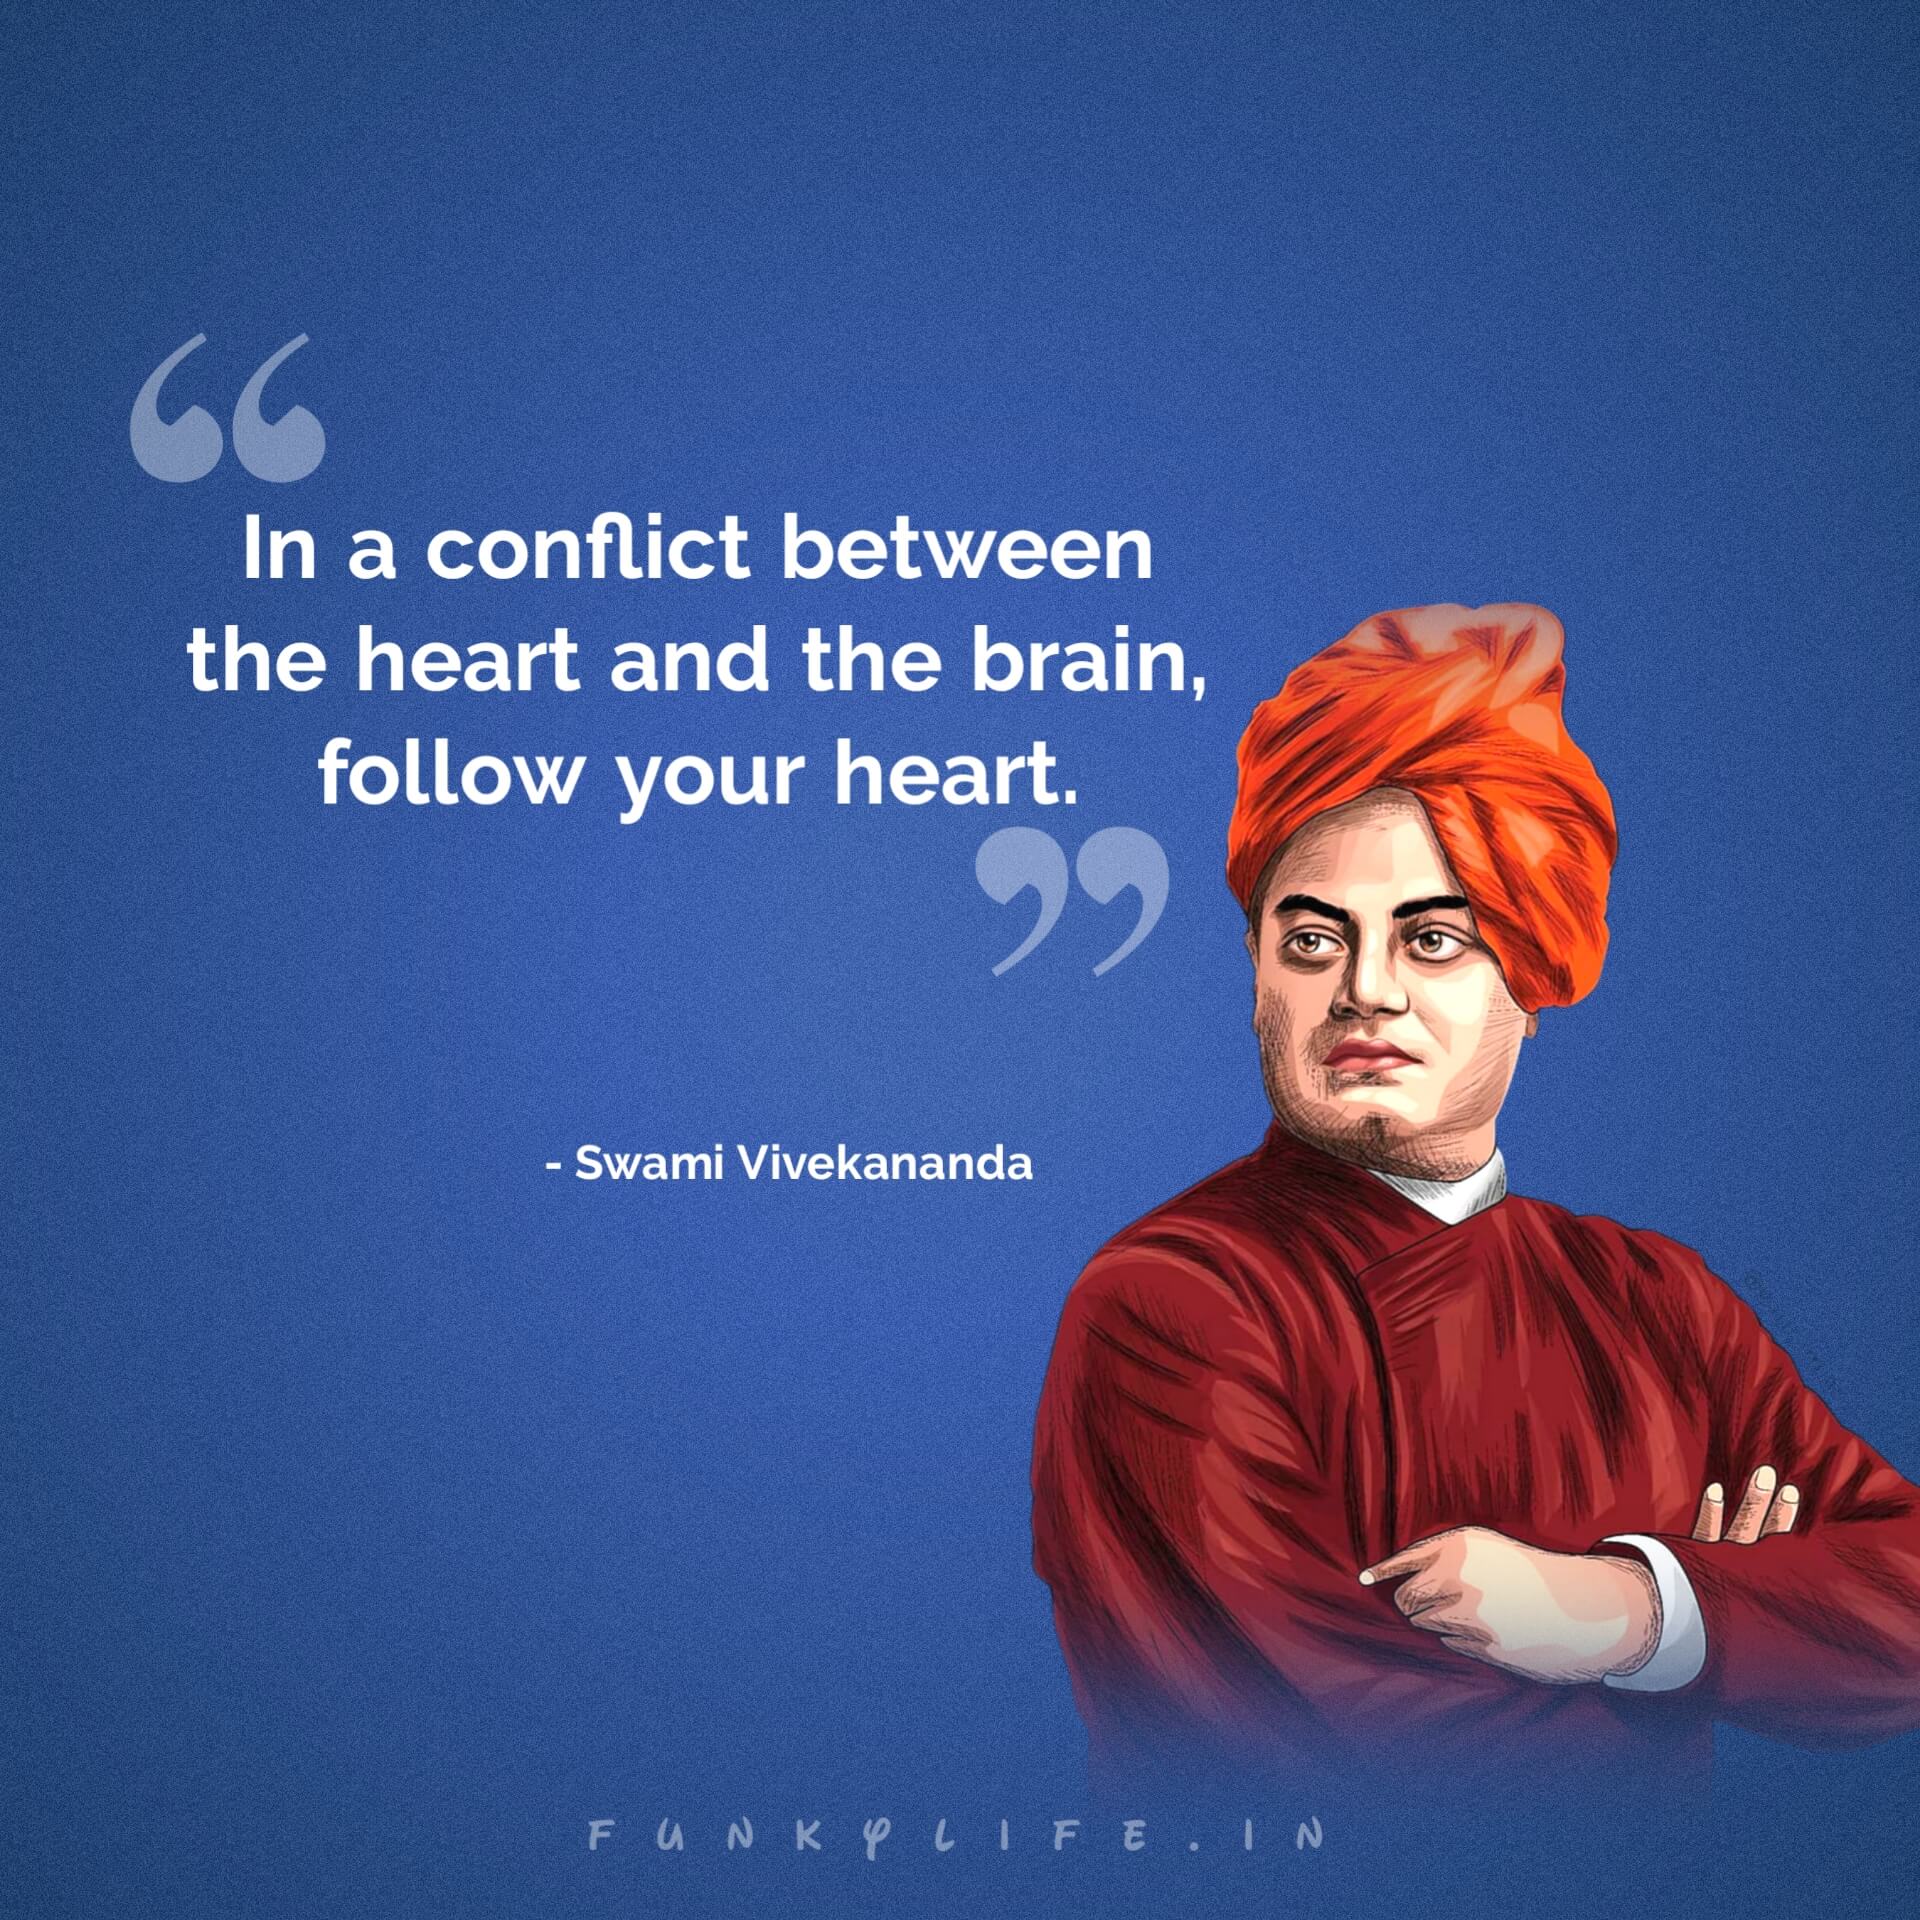 Swami Vivekananda Quotes in English
on Love